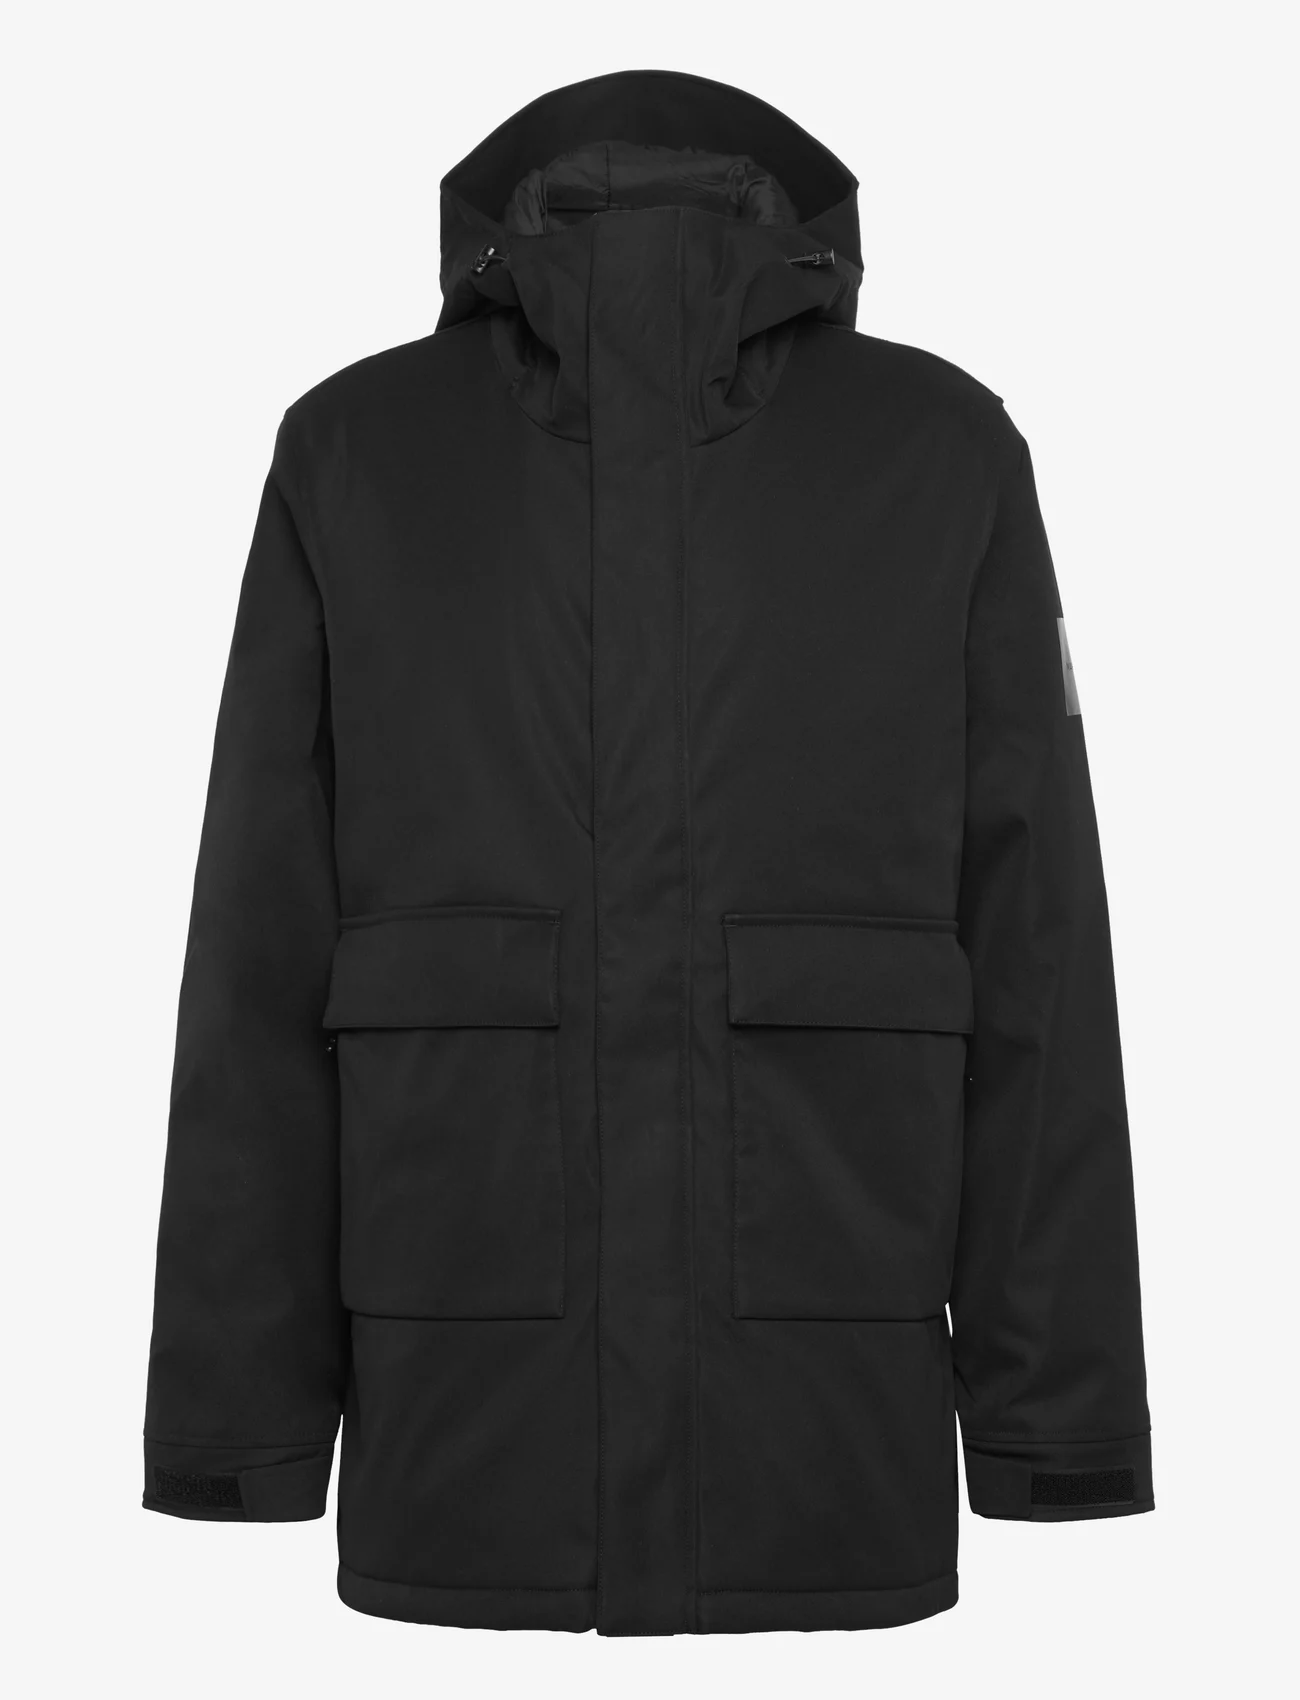 Makia - Hardy Jacket - ziemas jakas - black - 0